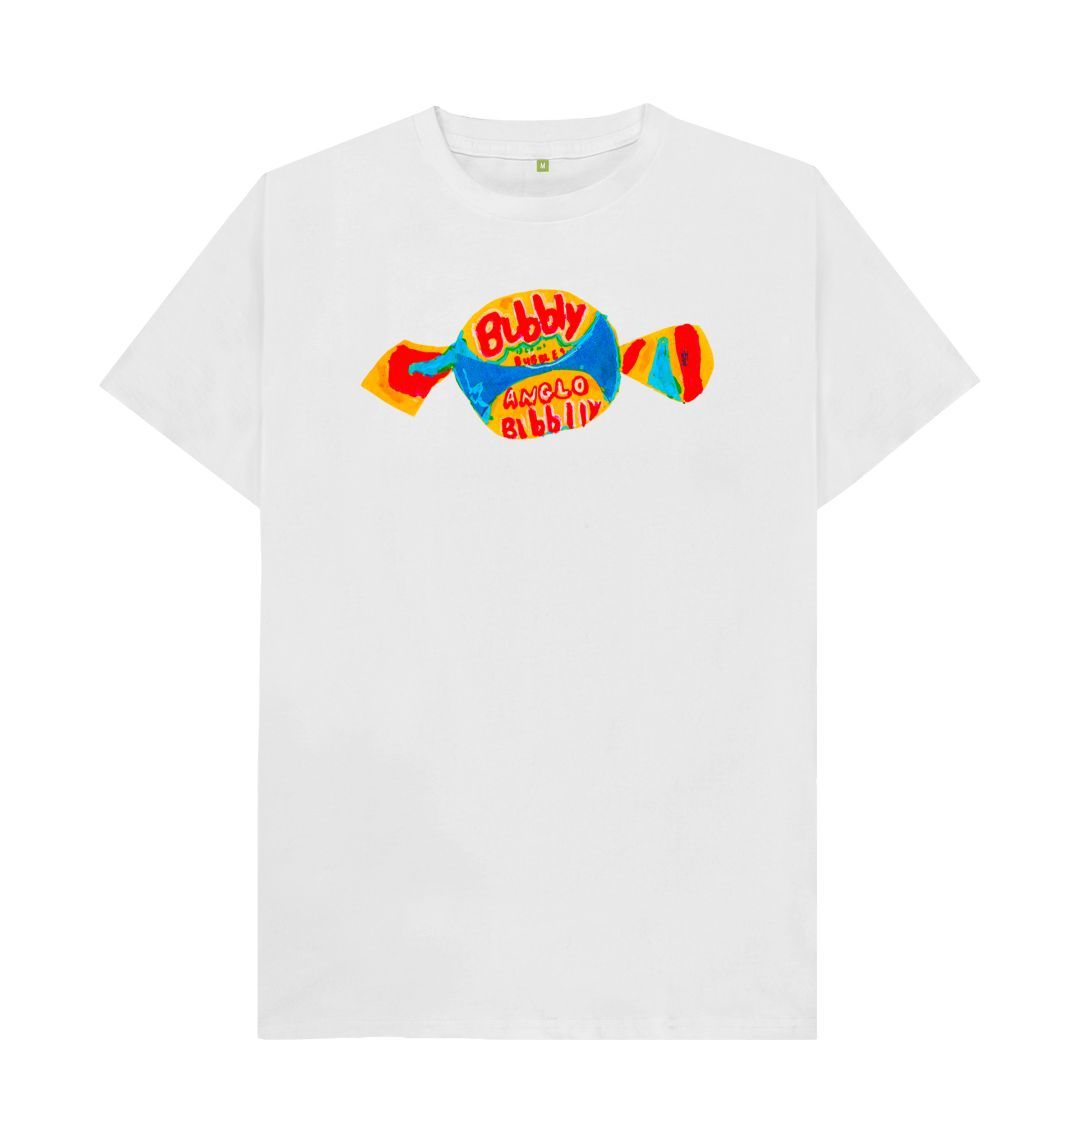 blowin' big bubbles organic men's tee - Printed T-shirt - Sarah Millin